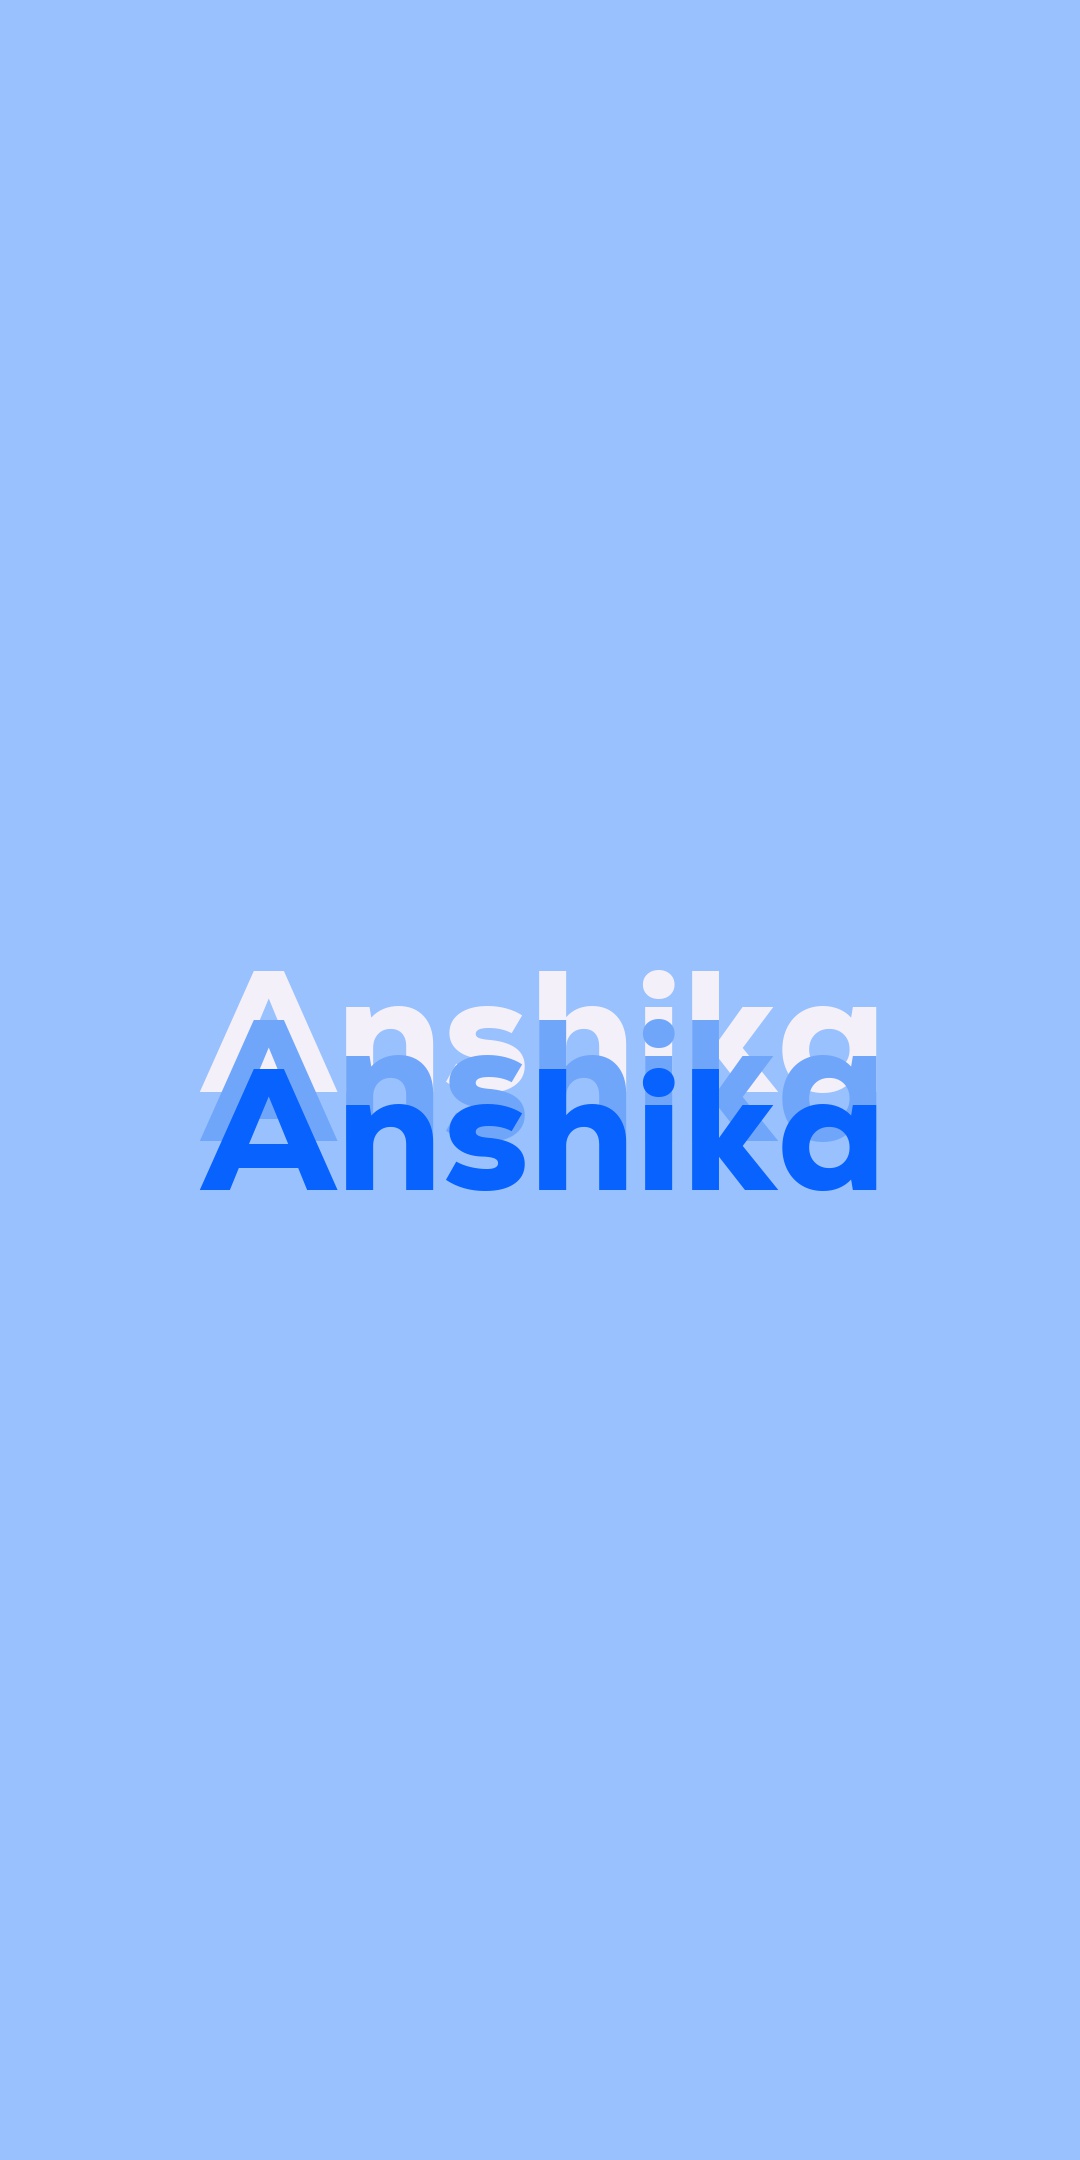 Anshika Name Signature Style | A Signature Style | Signature Style of My Name  Anshika - YouTube